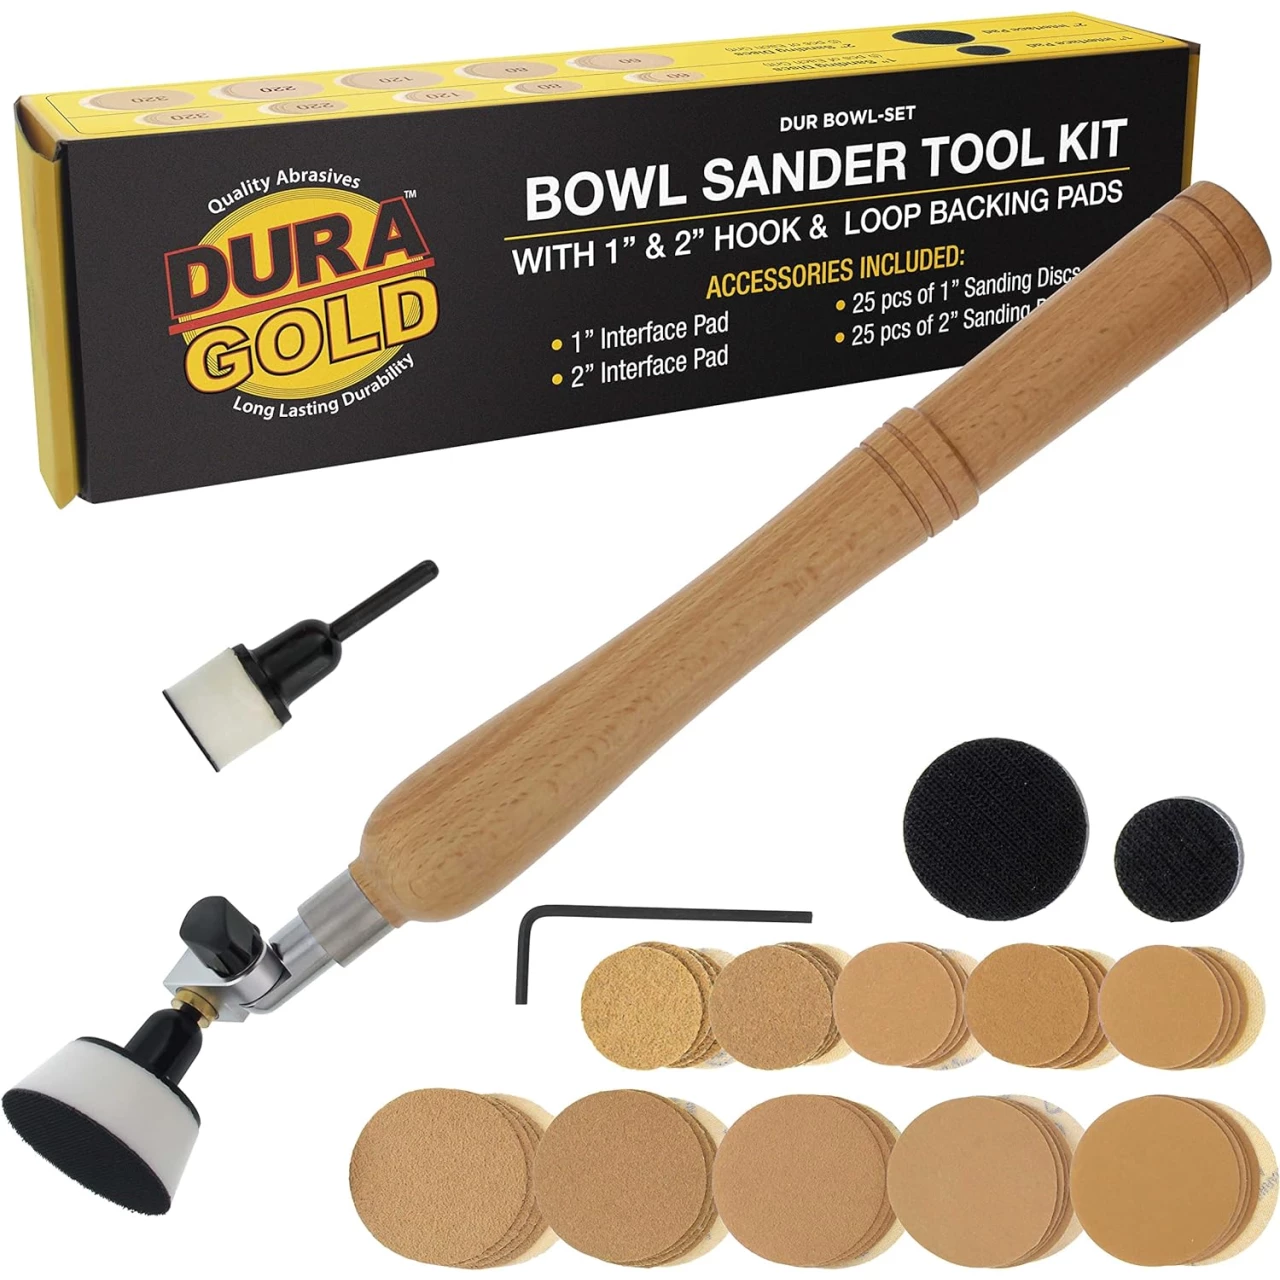 Dura-Gold Bowl Sander Tool Kit